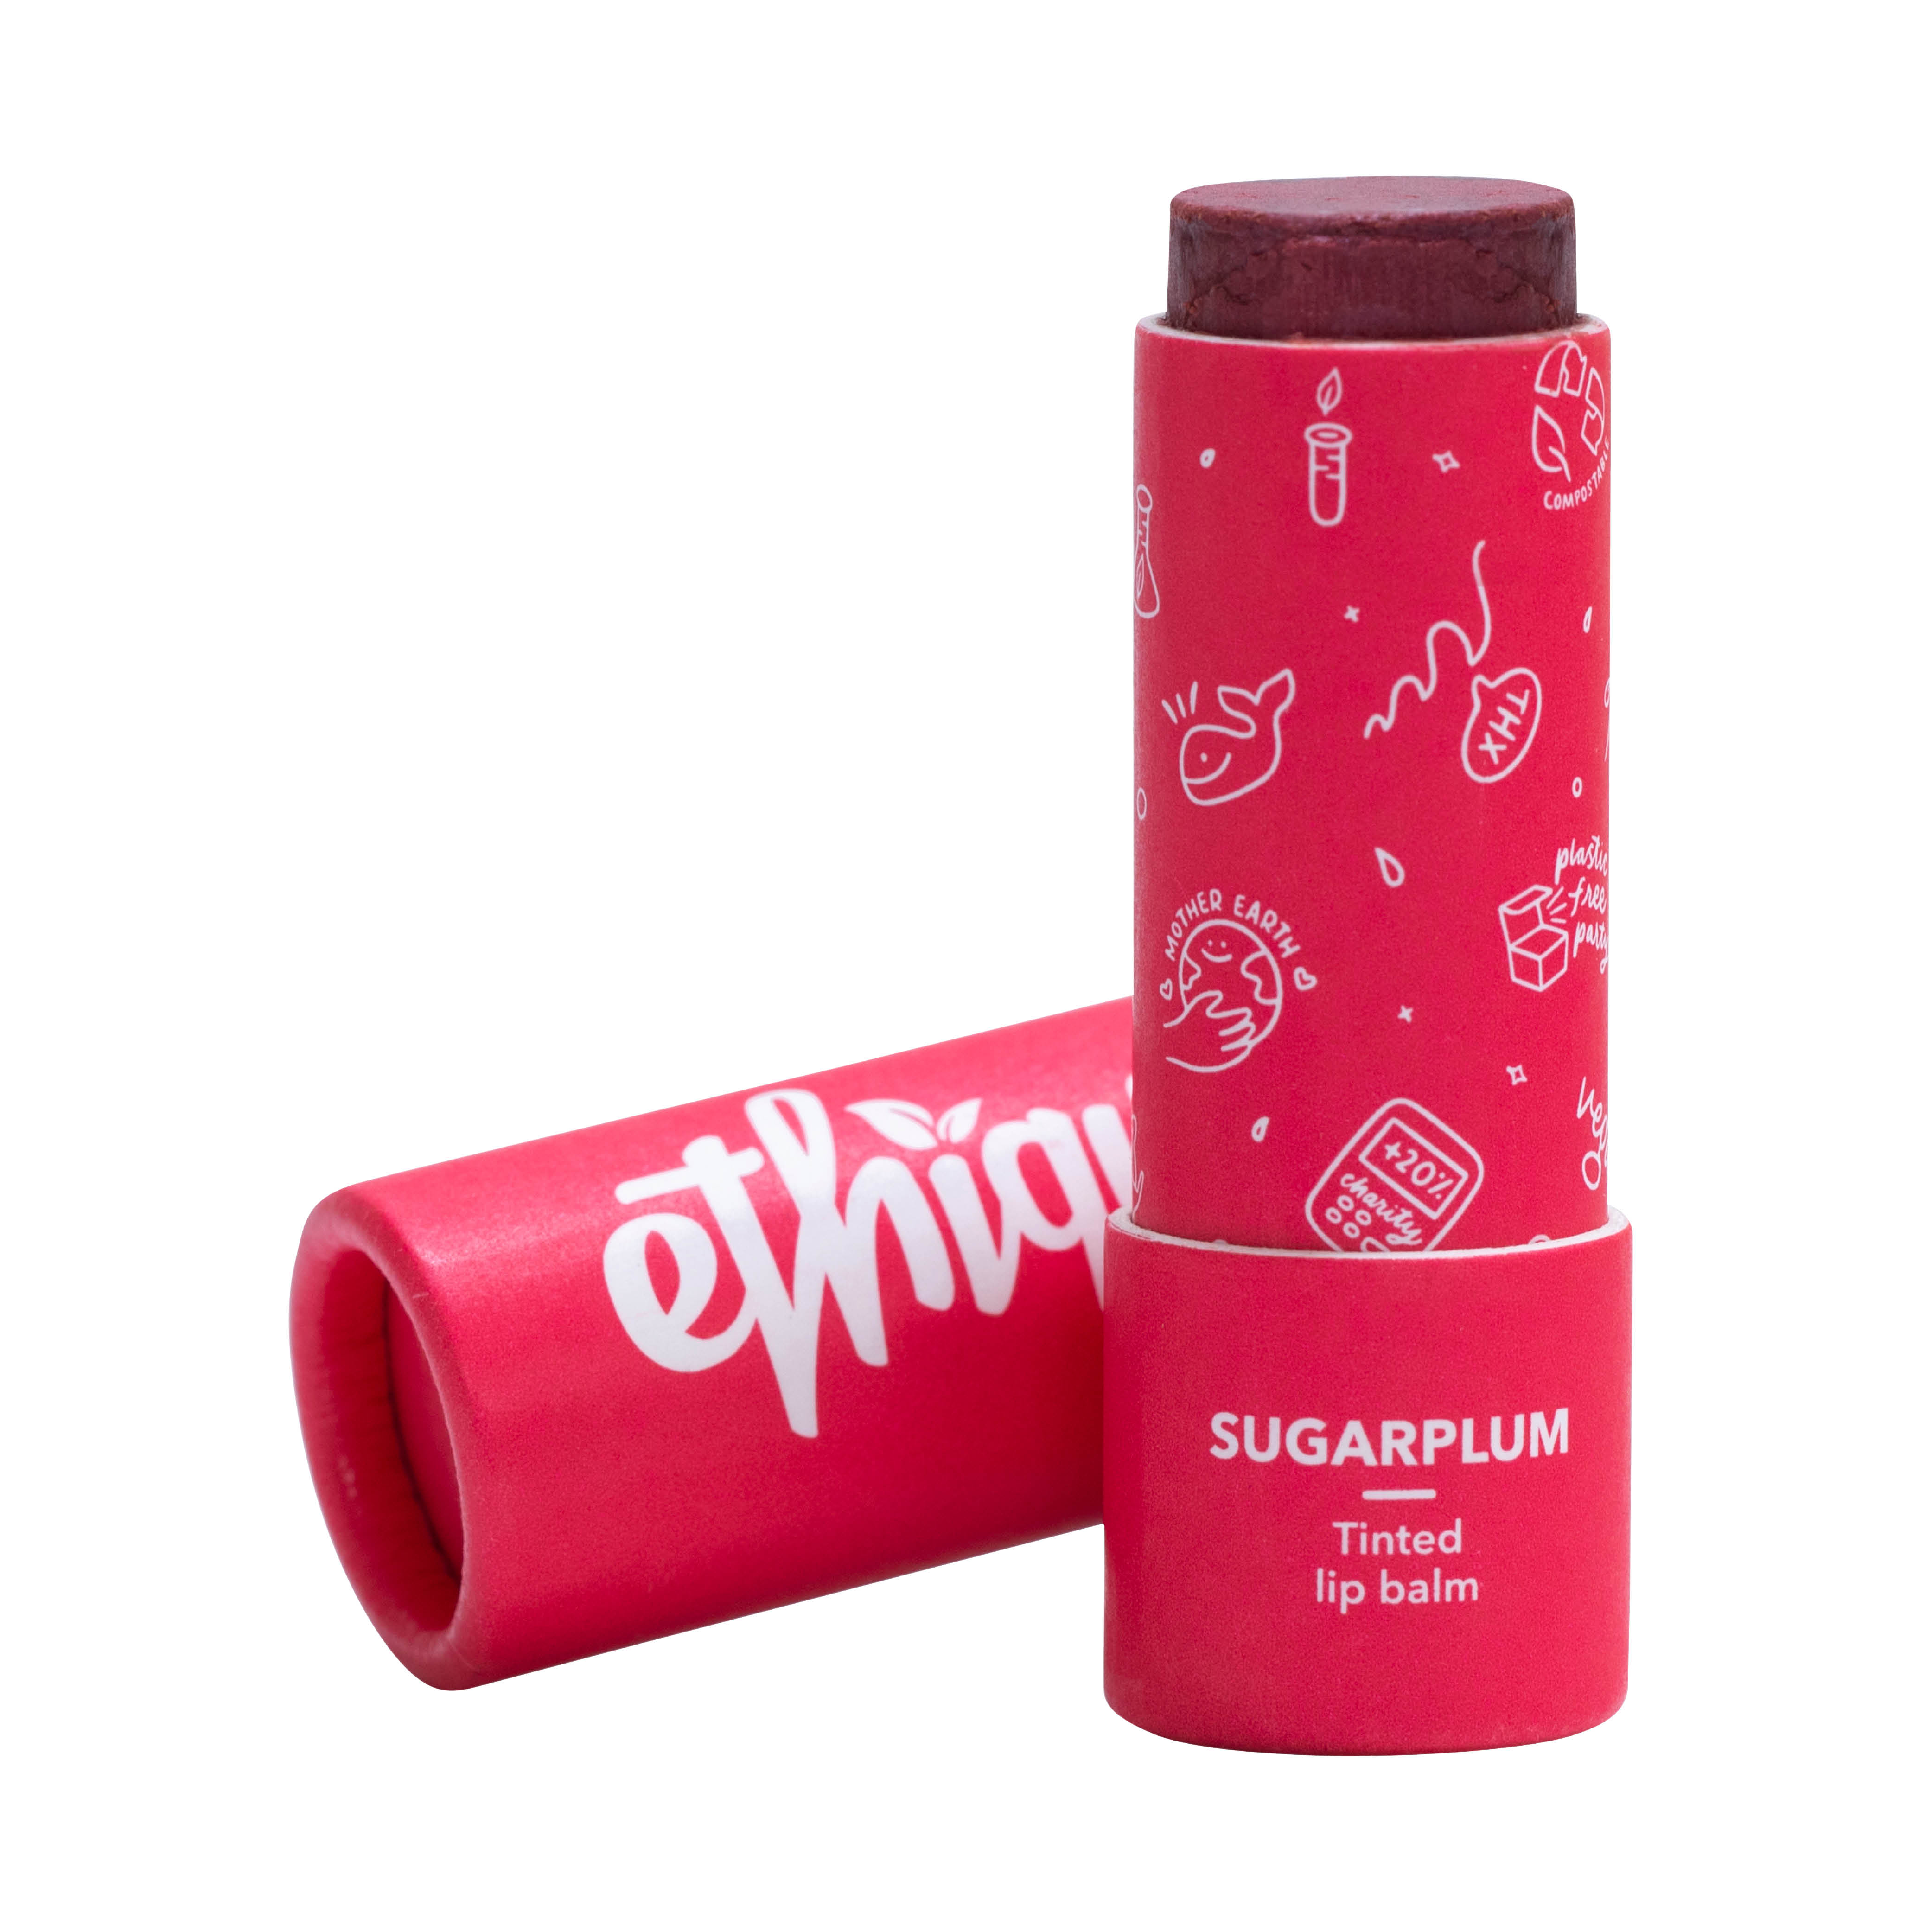 Ethique Sugarplum - Tinted lip balm, 1 each - image 1 of 11